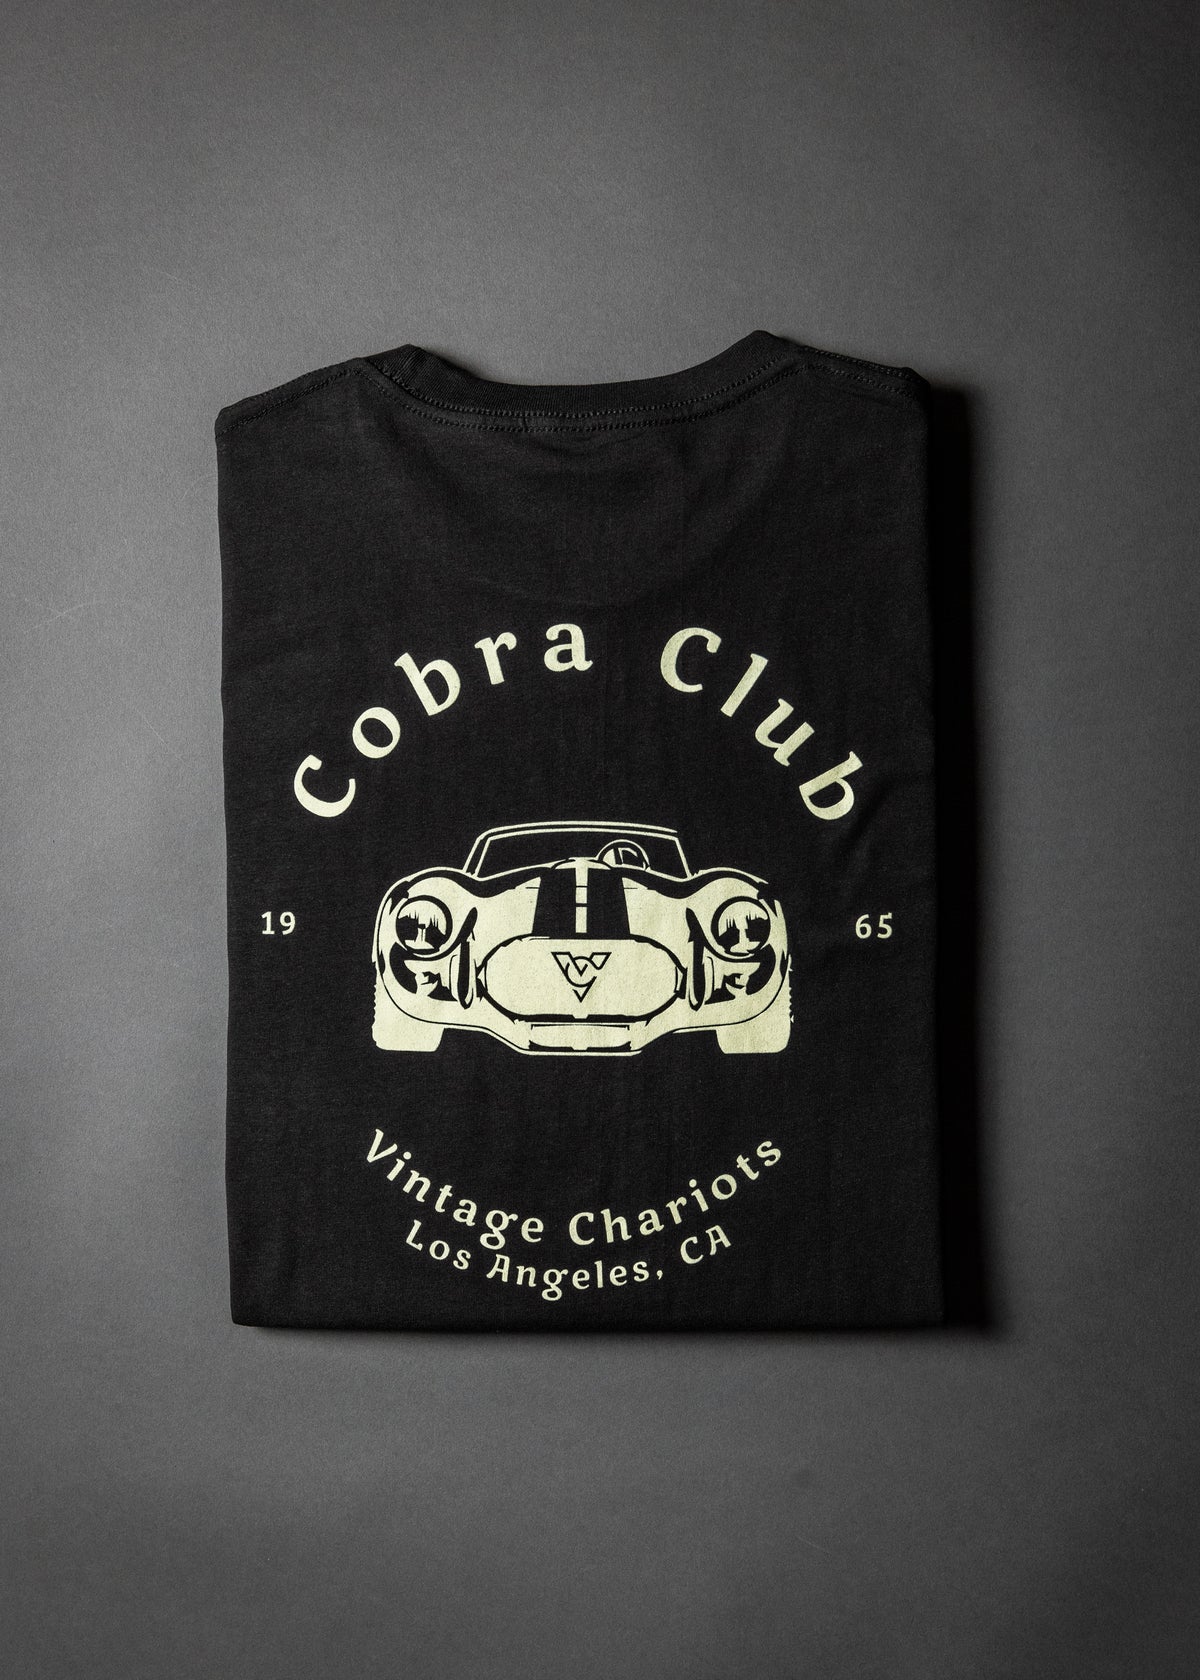 COBRA CLUB TEE (Black)